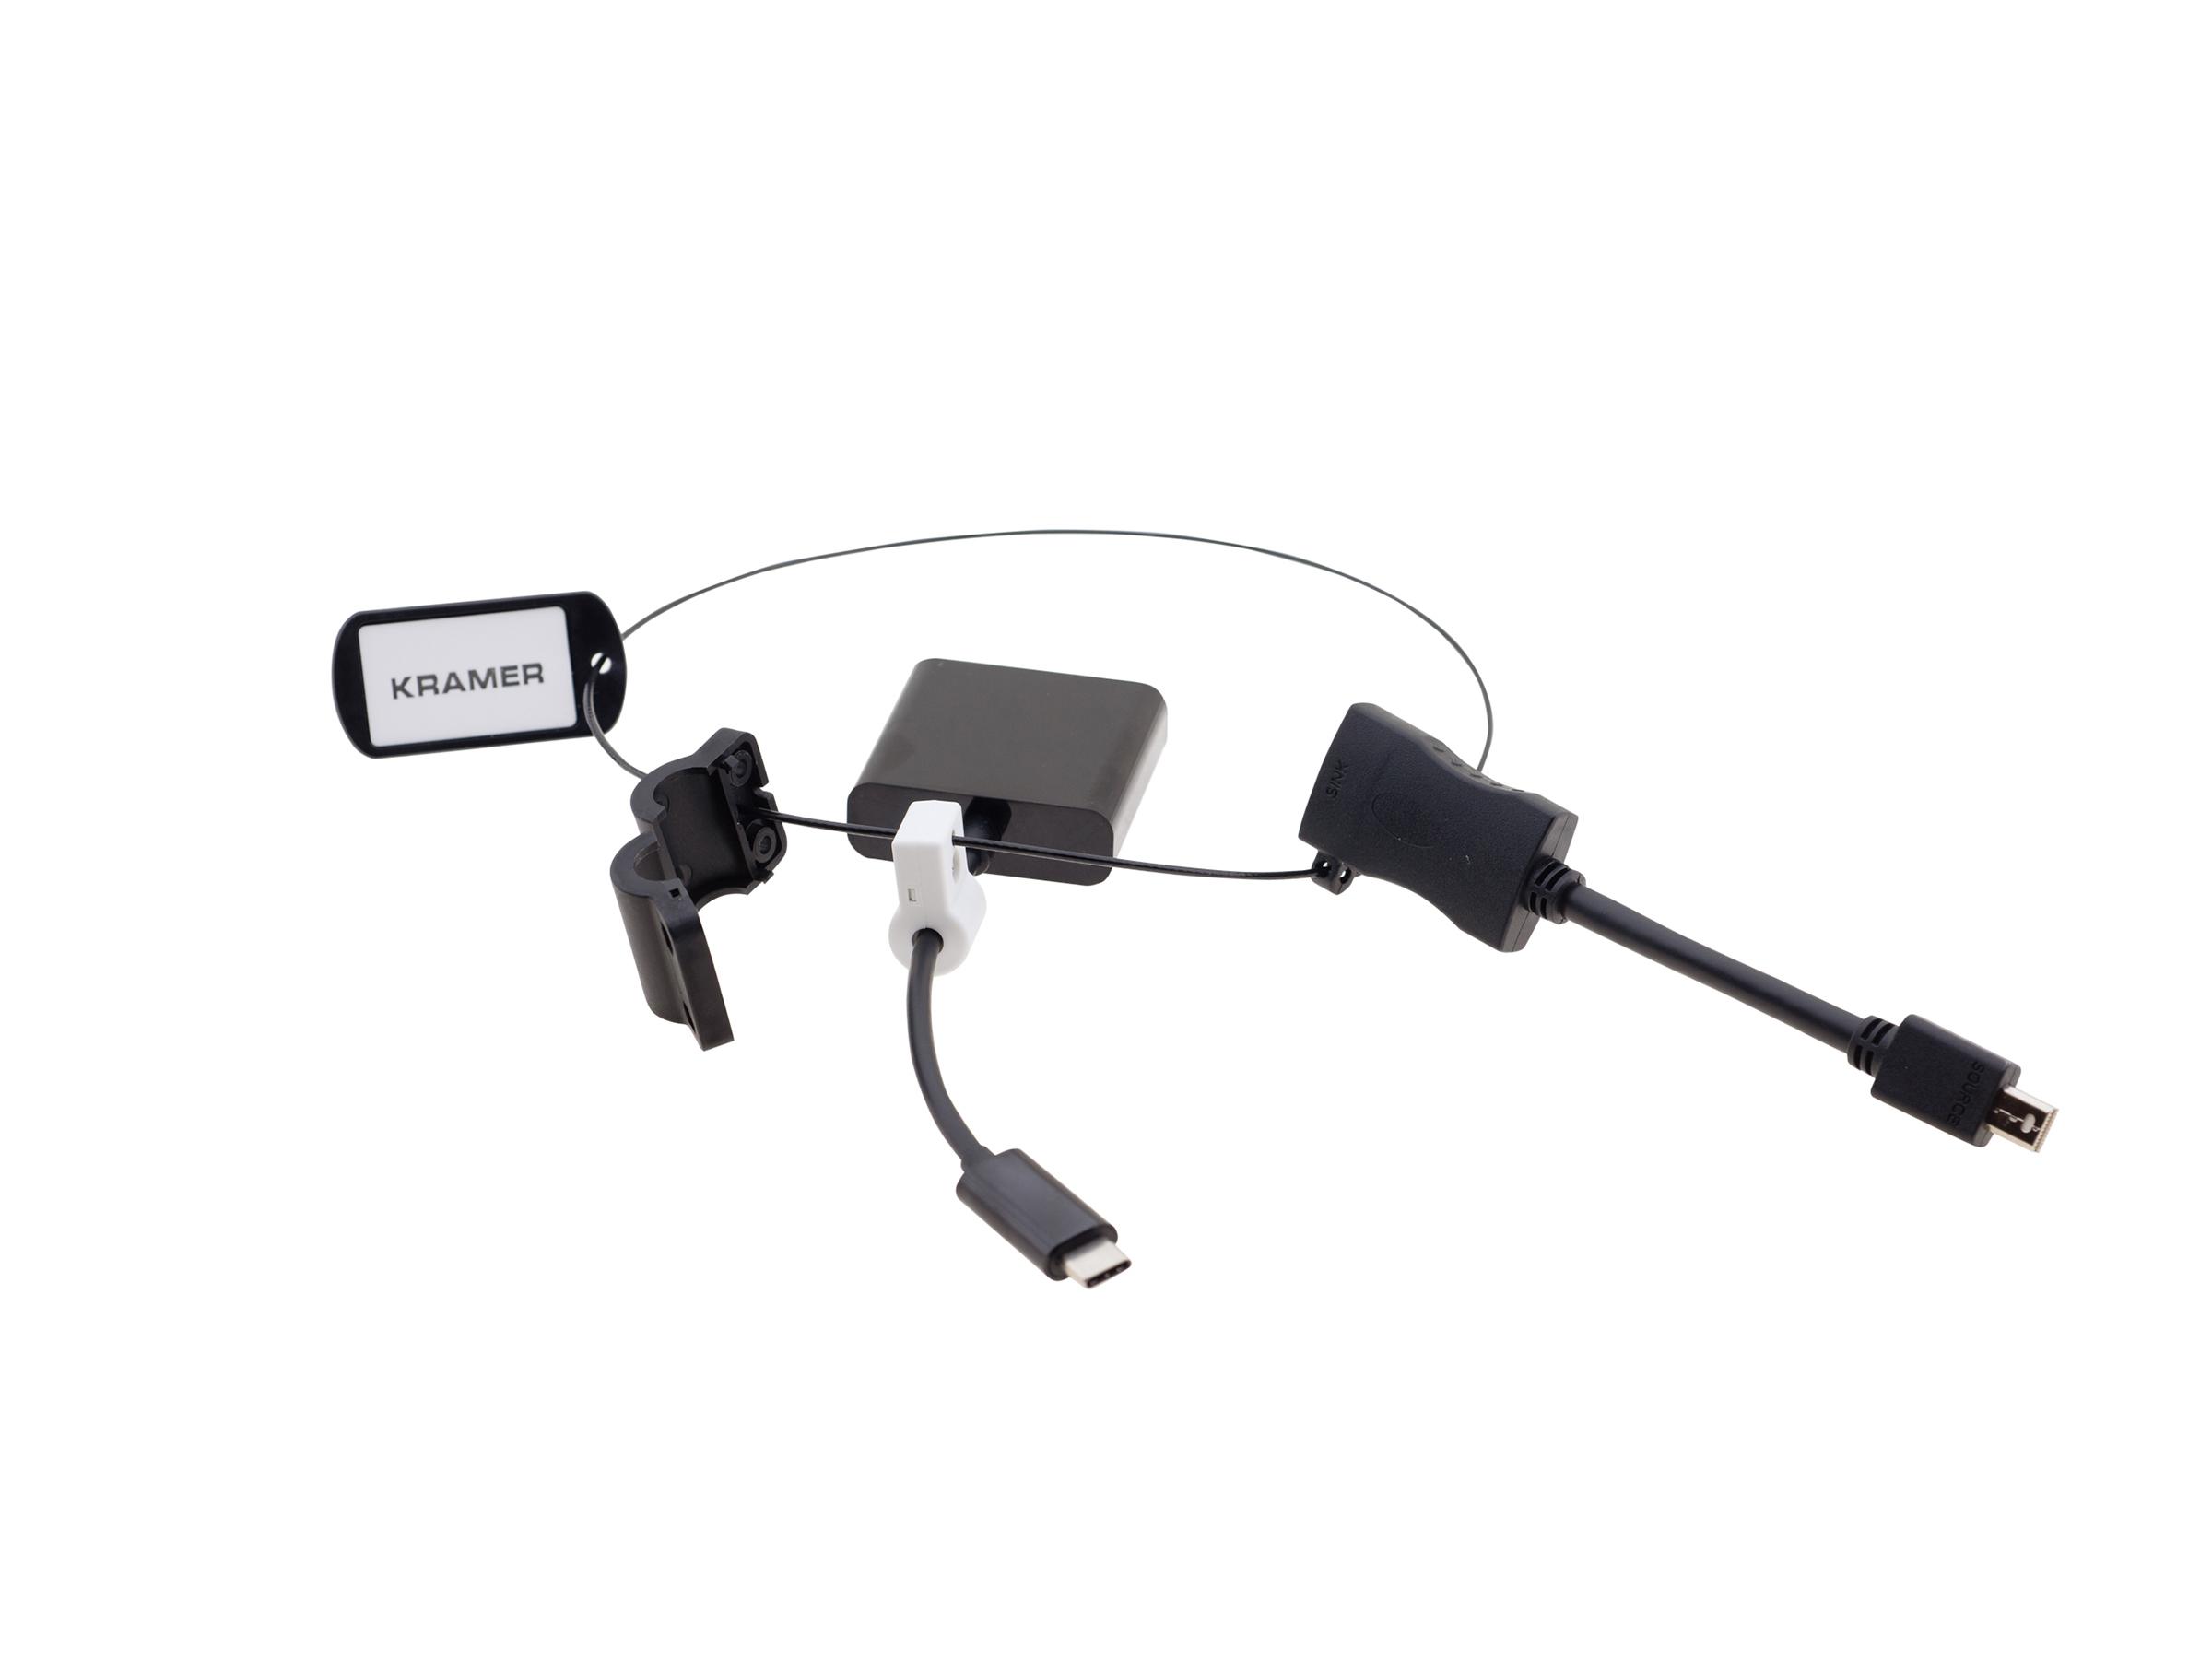 AD-RING-8 USB type-C/Mini DisplayPort  to HDMI (F) Adapter Ring by Kramer